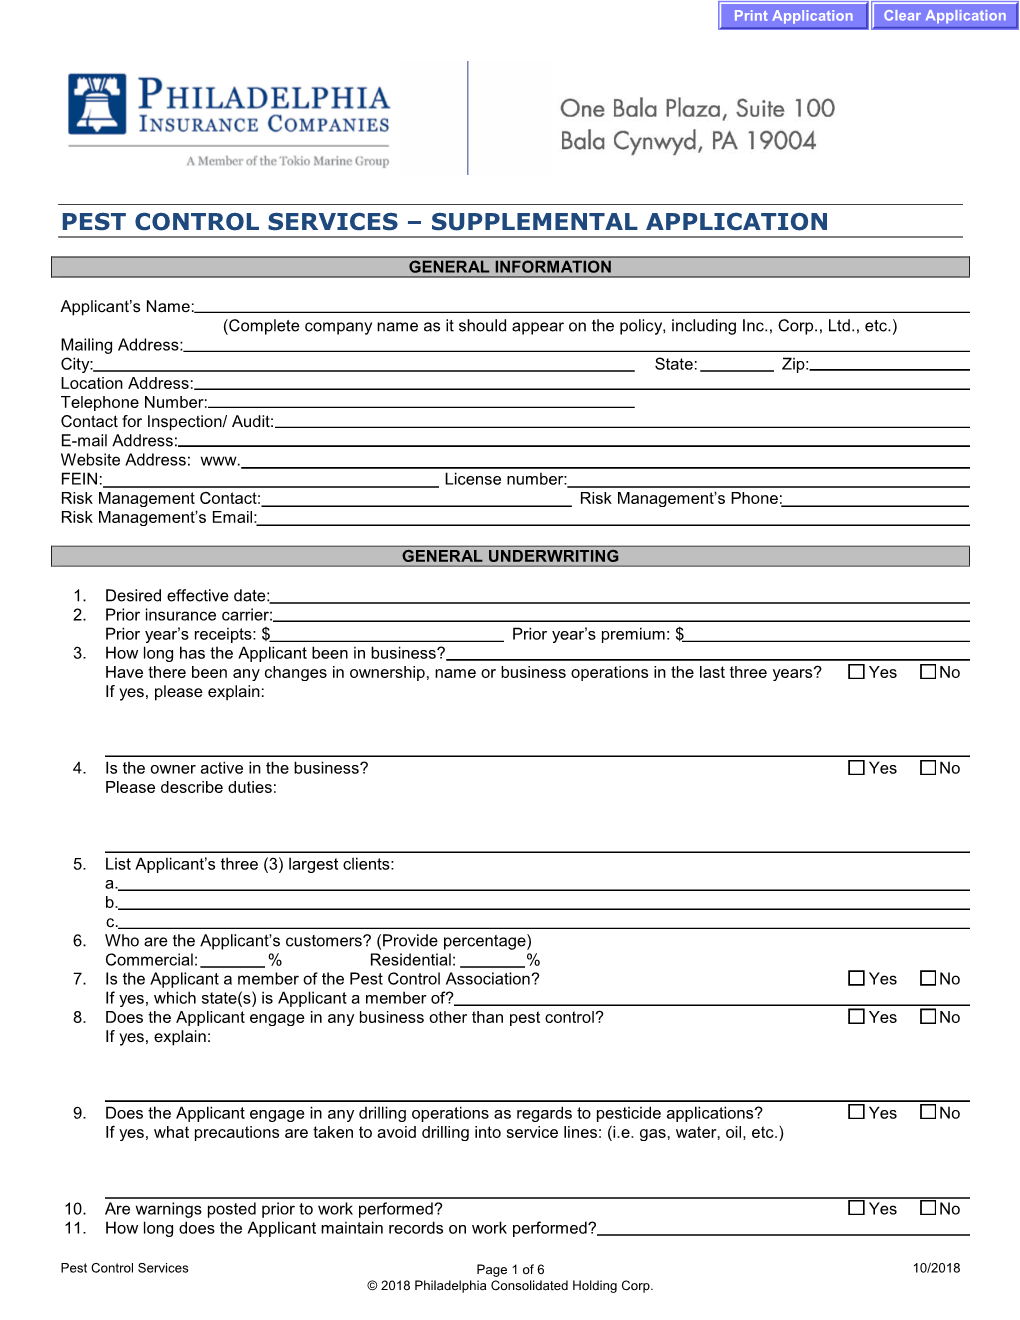 Pest Control Services Supplemental Applicationinternallink